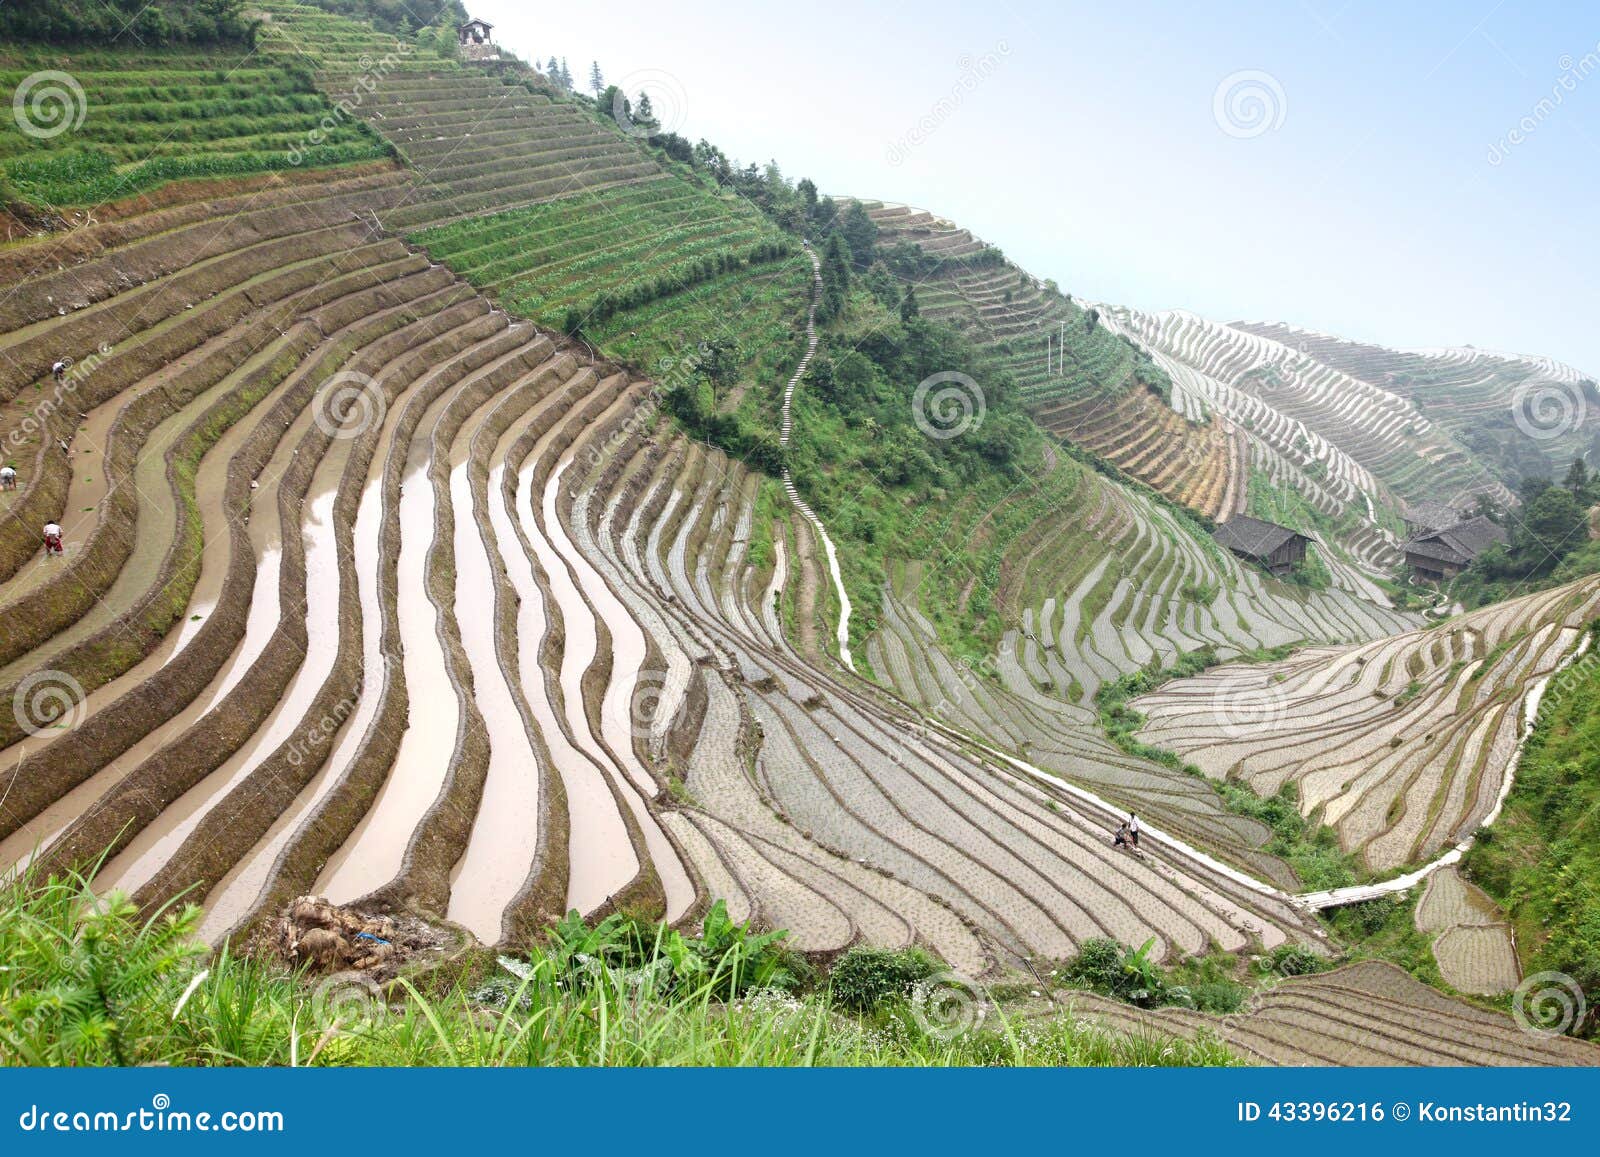 longji rice terraces unesco site, china